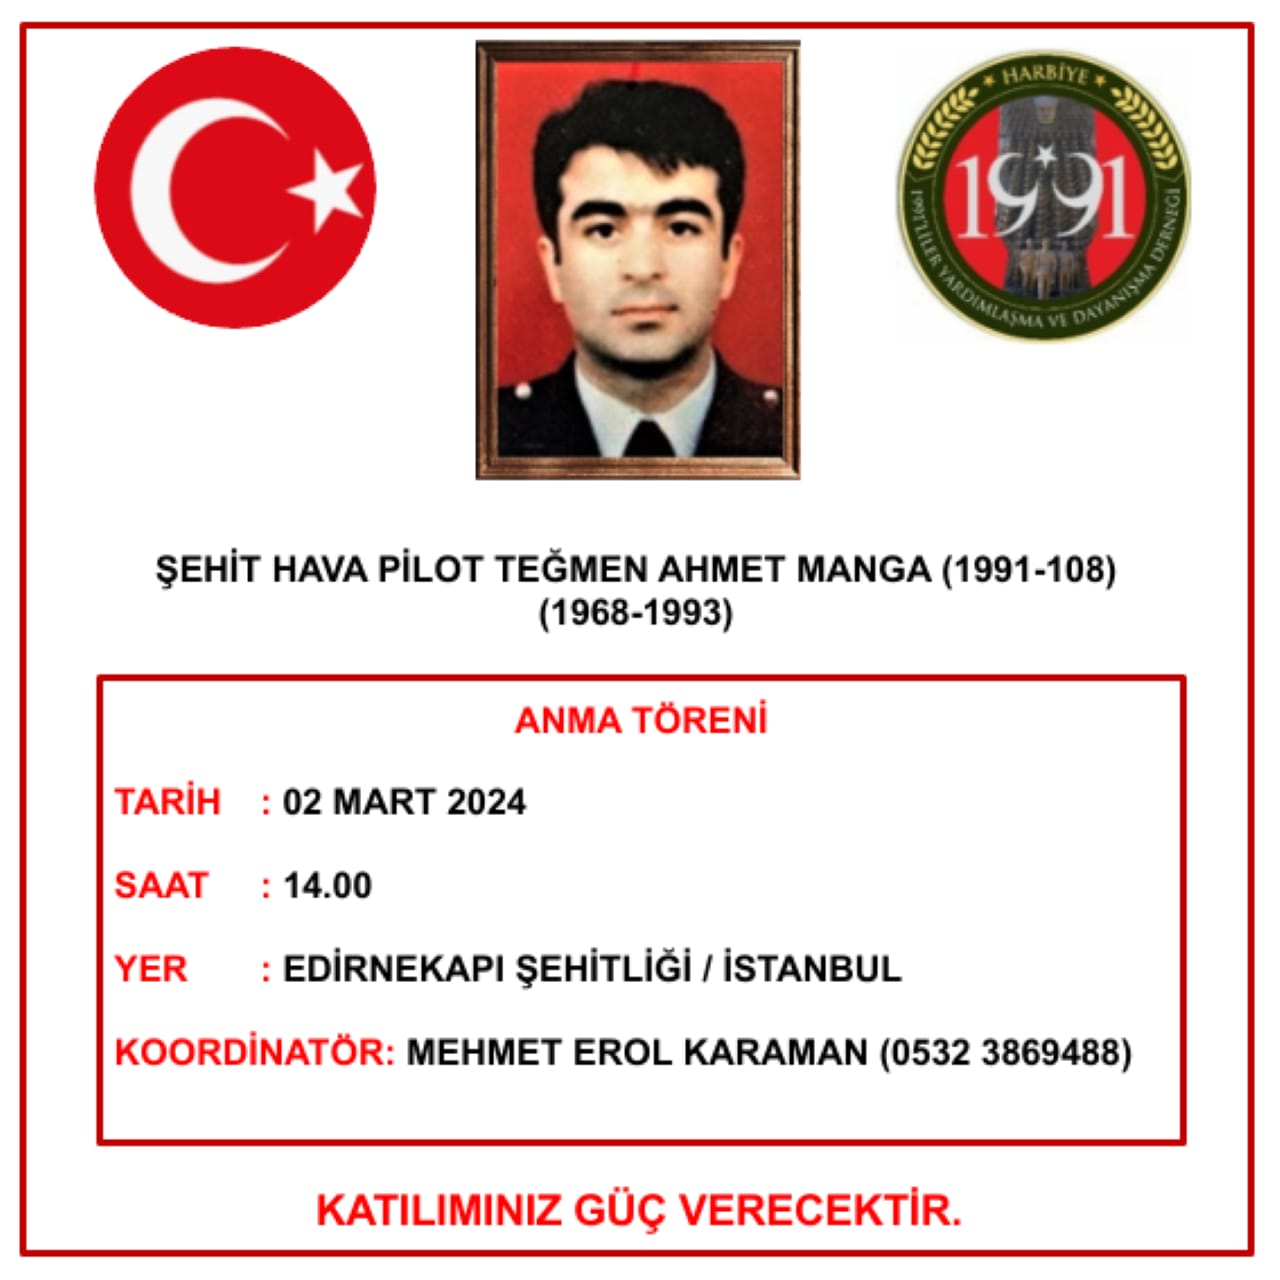 364 Şht.Hv.Plt.Tğm.Ahmet MANGA Anma Töreni (02.03.2024)